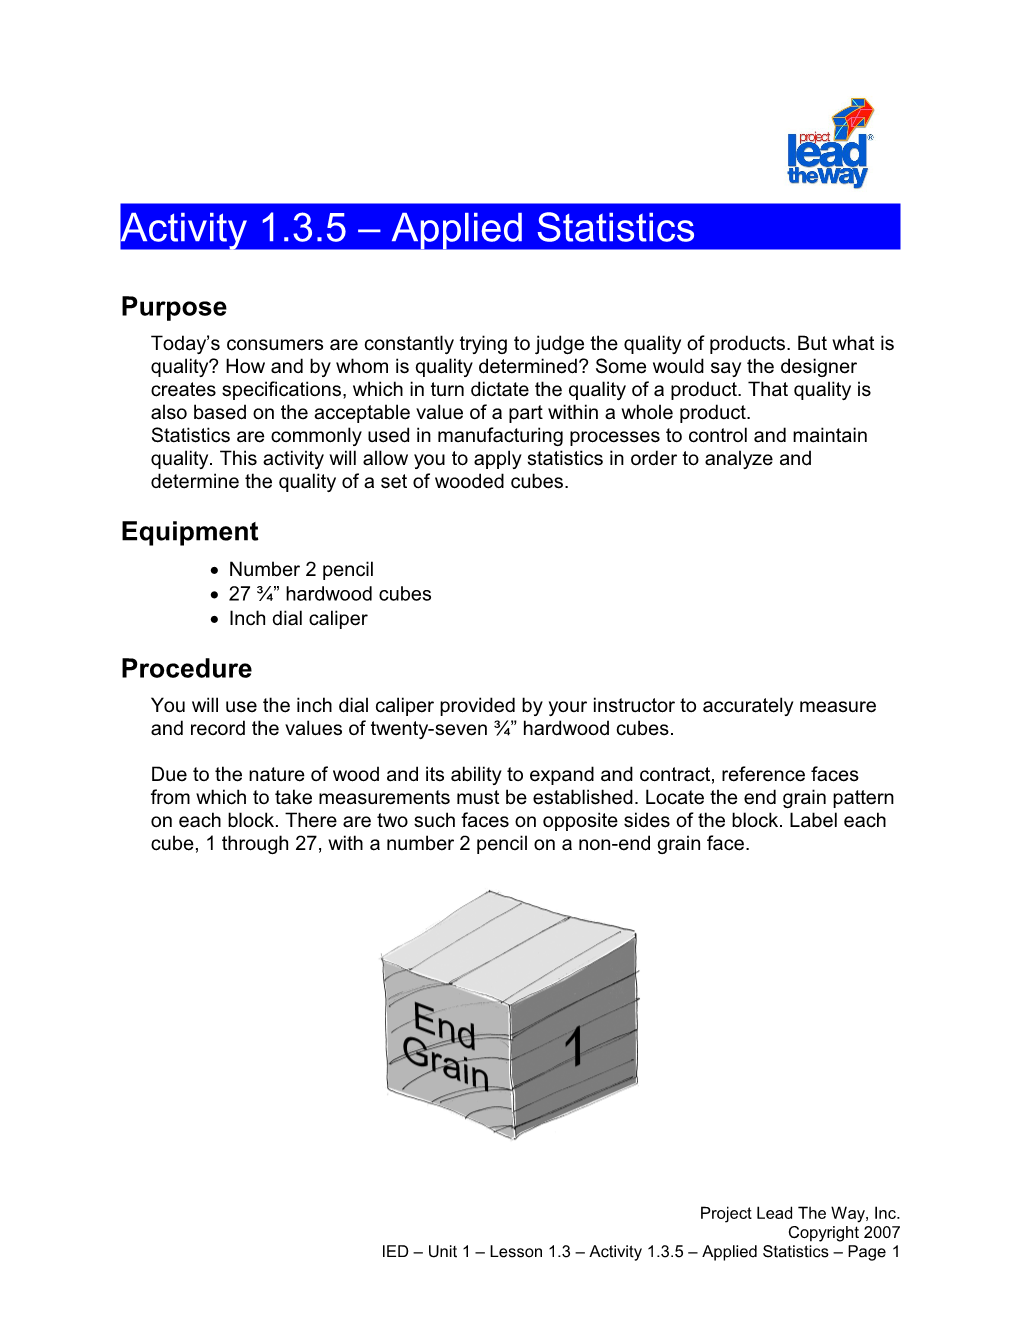 Activity 1.3.6 - Applied Statistics